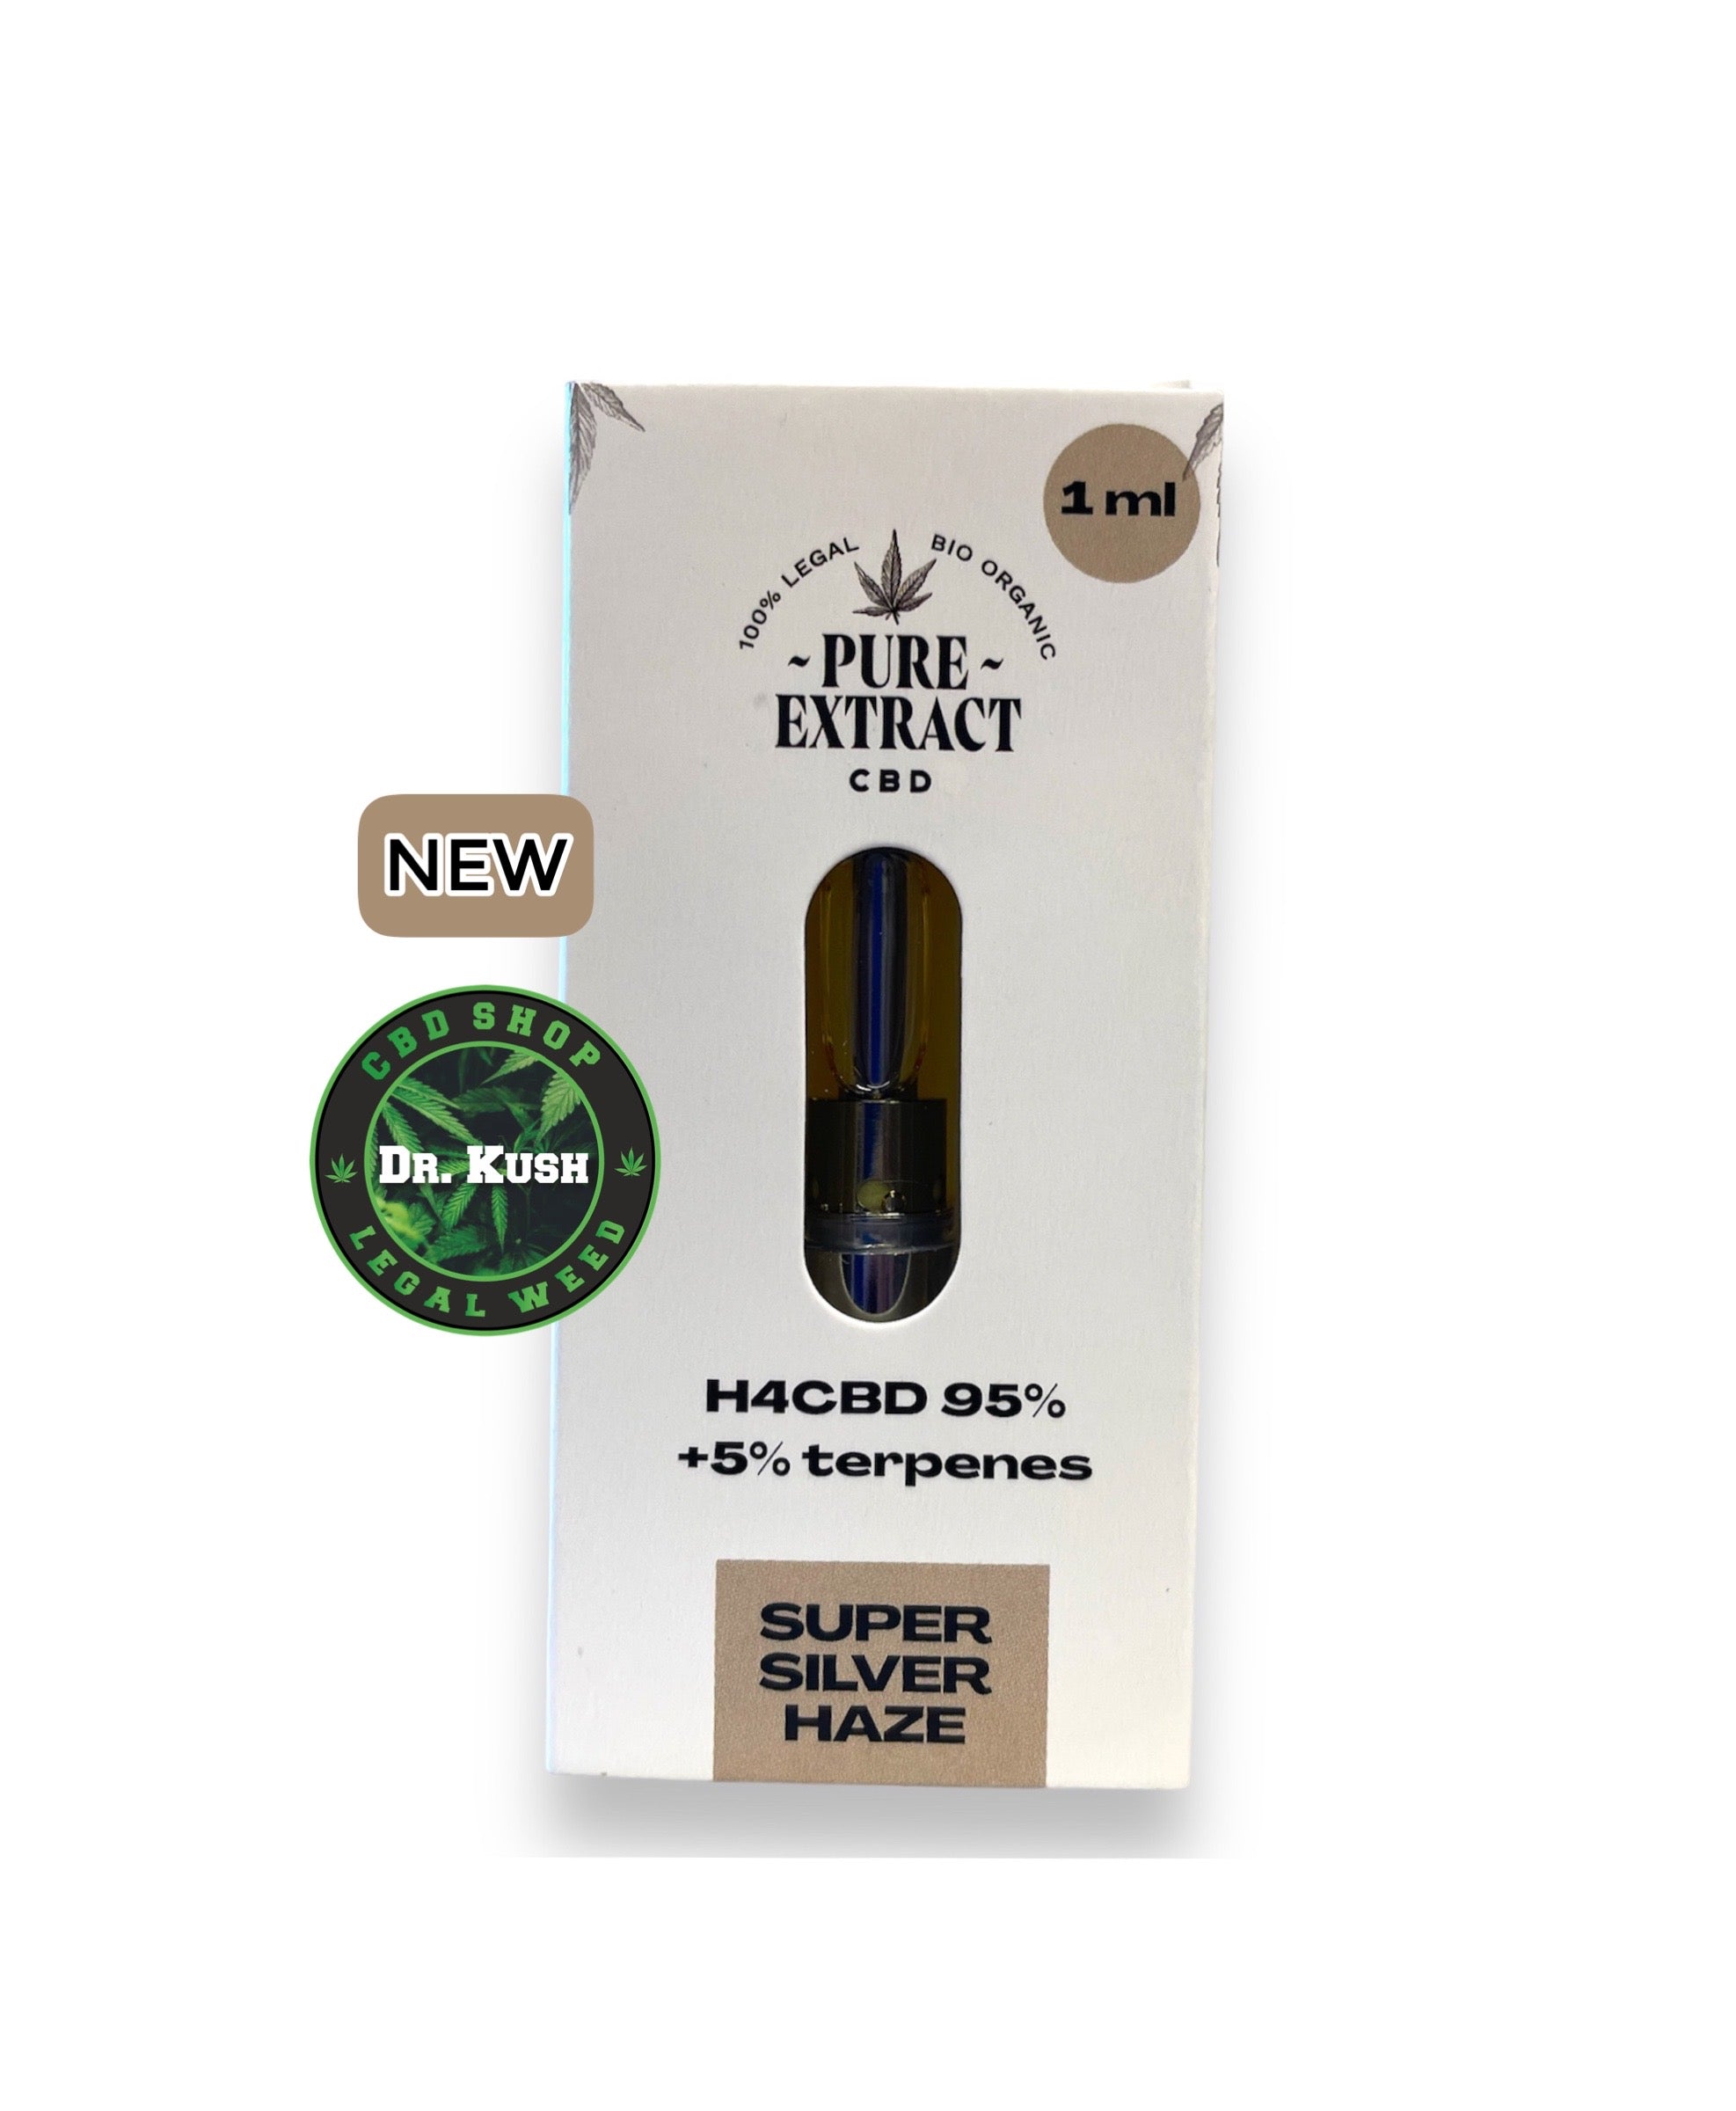 Pure Extract CBD Cartridge (Dab Pen) by H4CBD - Super Silver Haze - 95% H4CBD - 1ML - 600 puffs